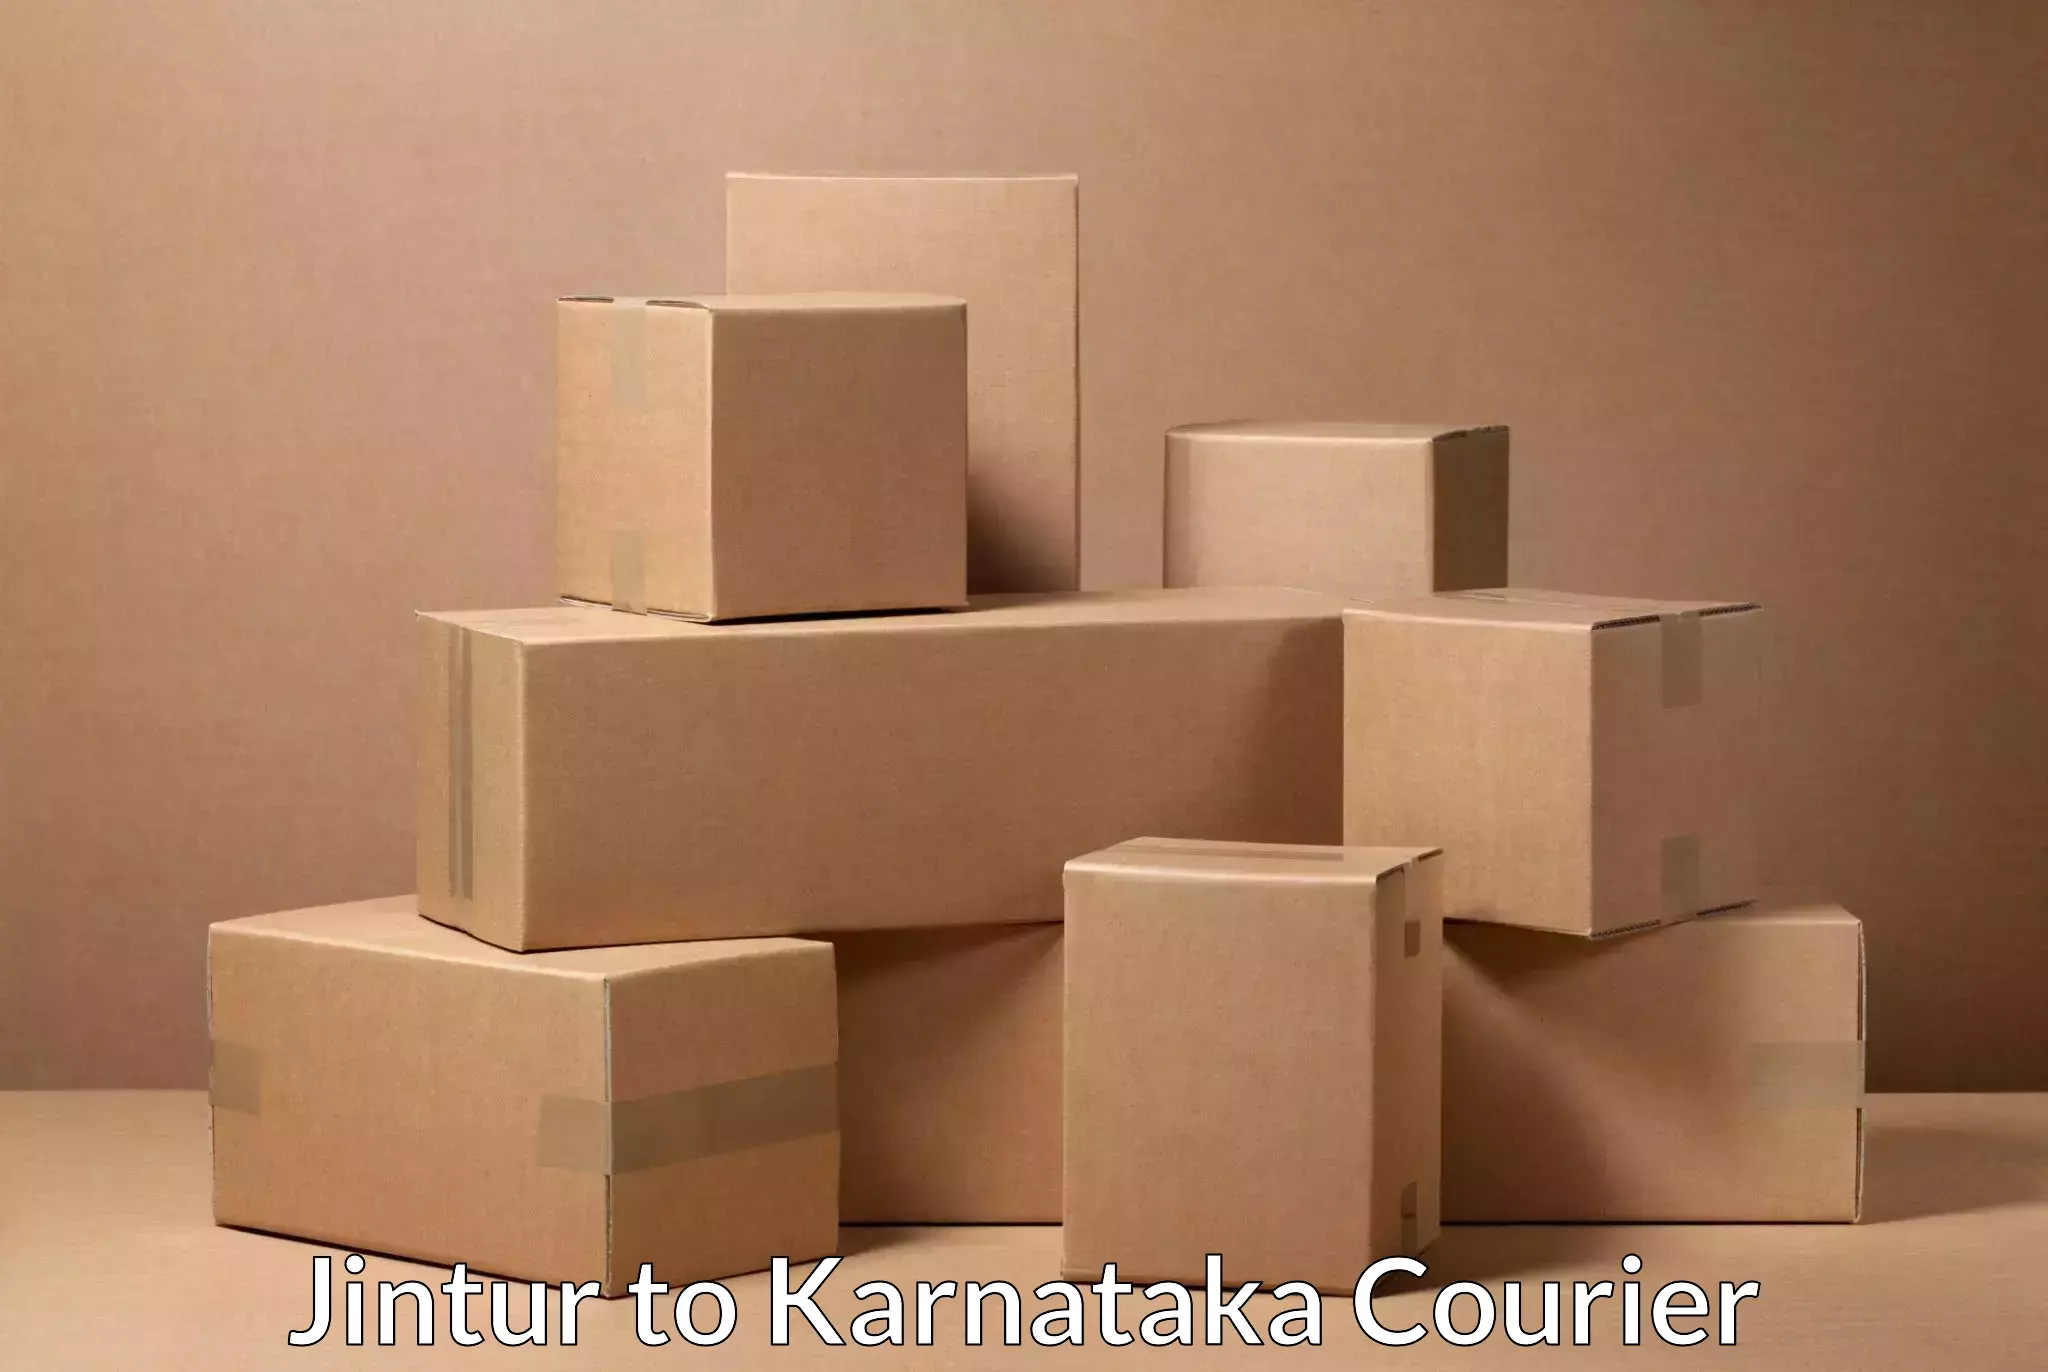 Nationwide shipping capabilities Jintur to Karnataka